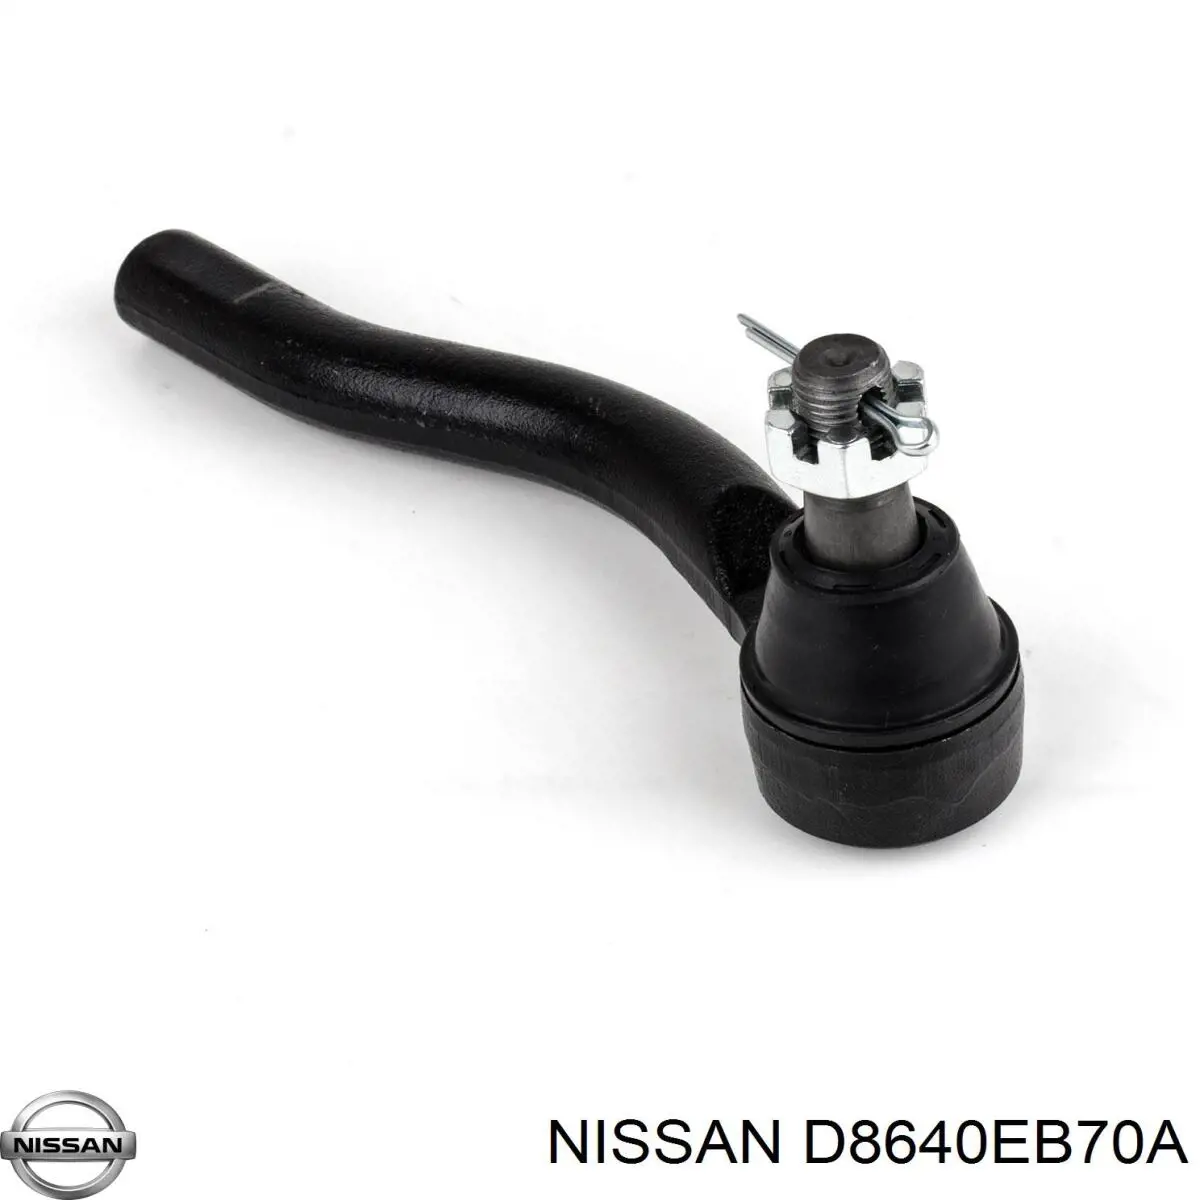 D8640EB70A Nissan rótula barra de acoplamiento exterior